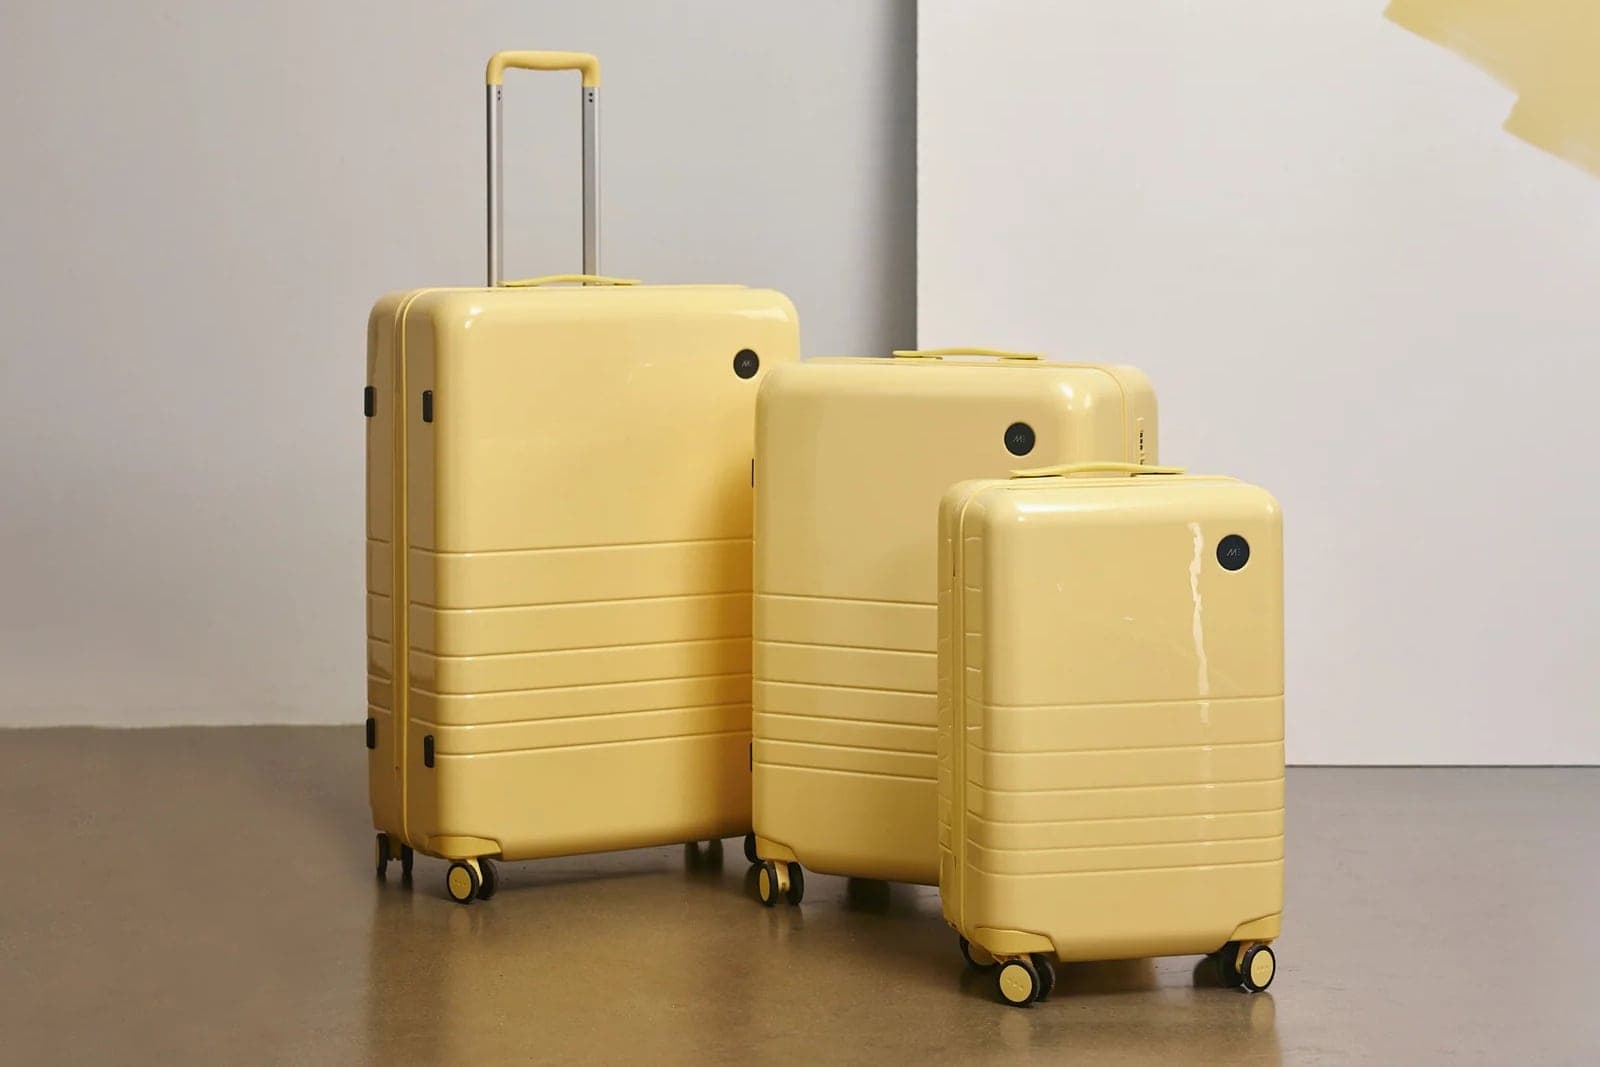 10 BEST Cheap Luggage Sets of 2023 - TravelFreak